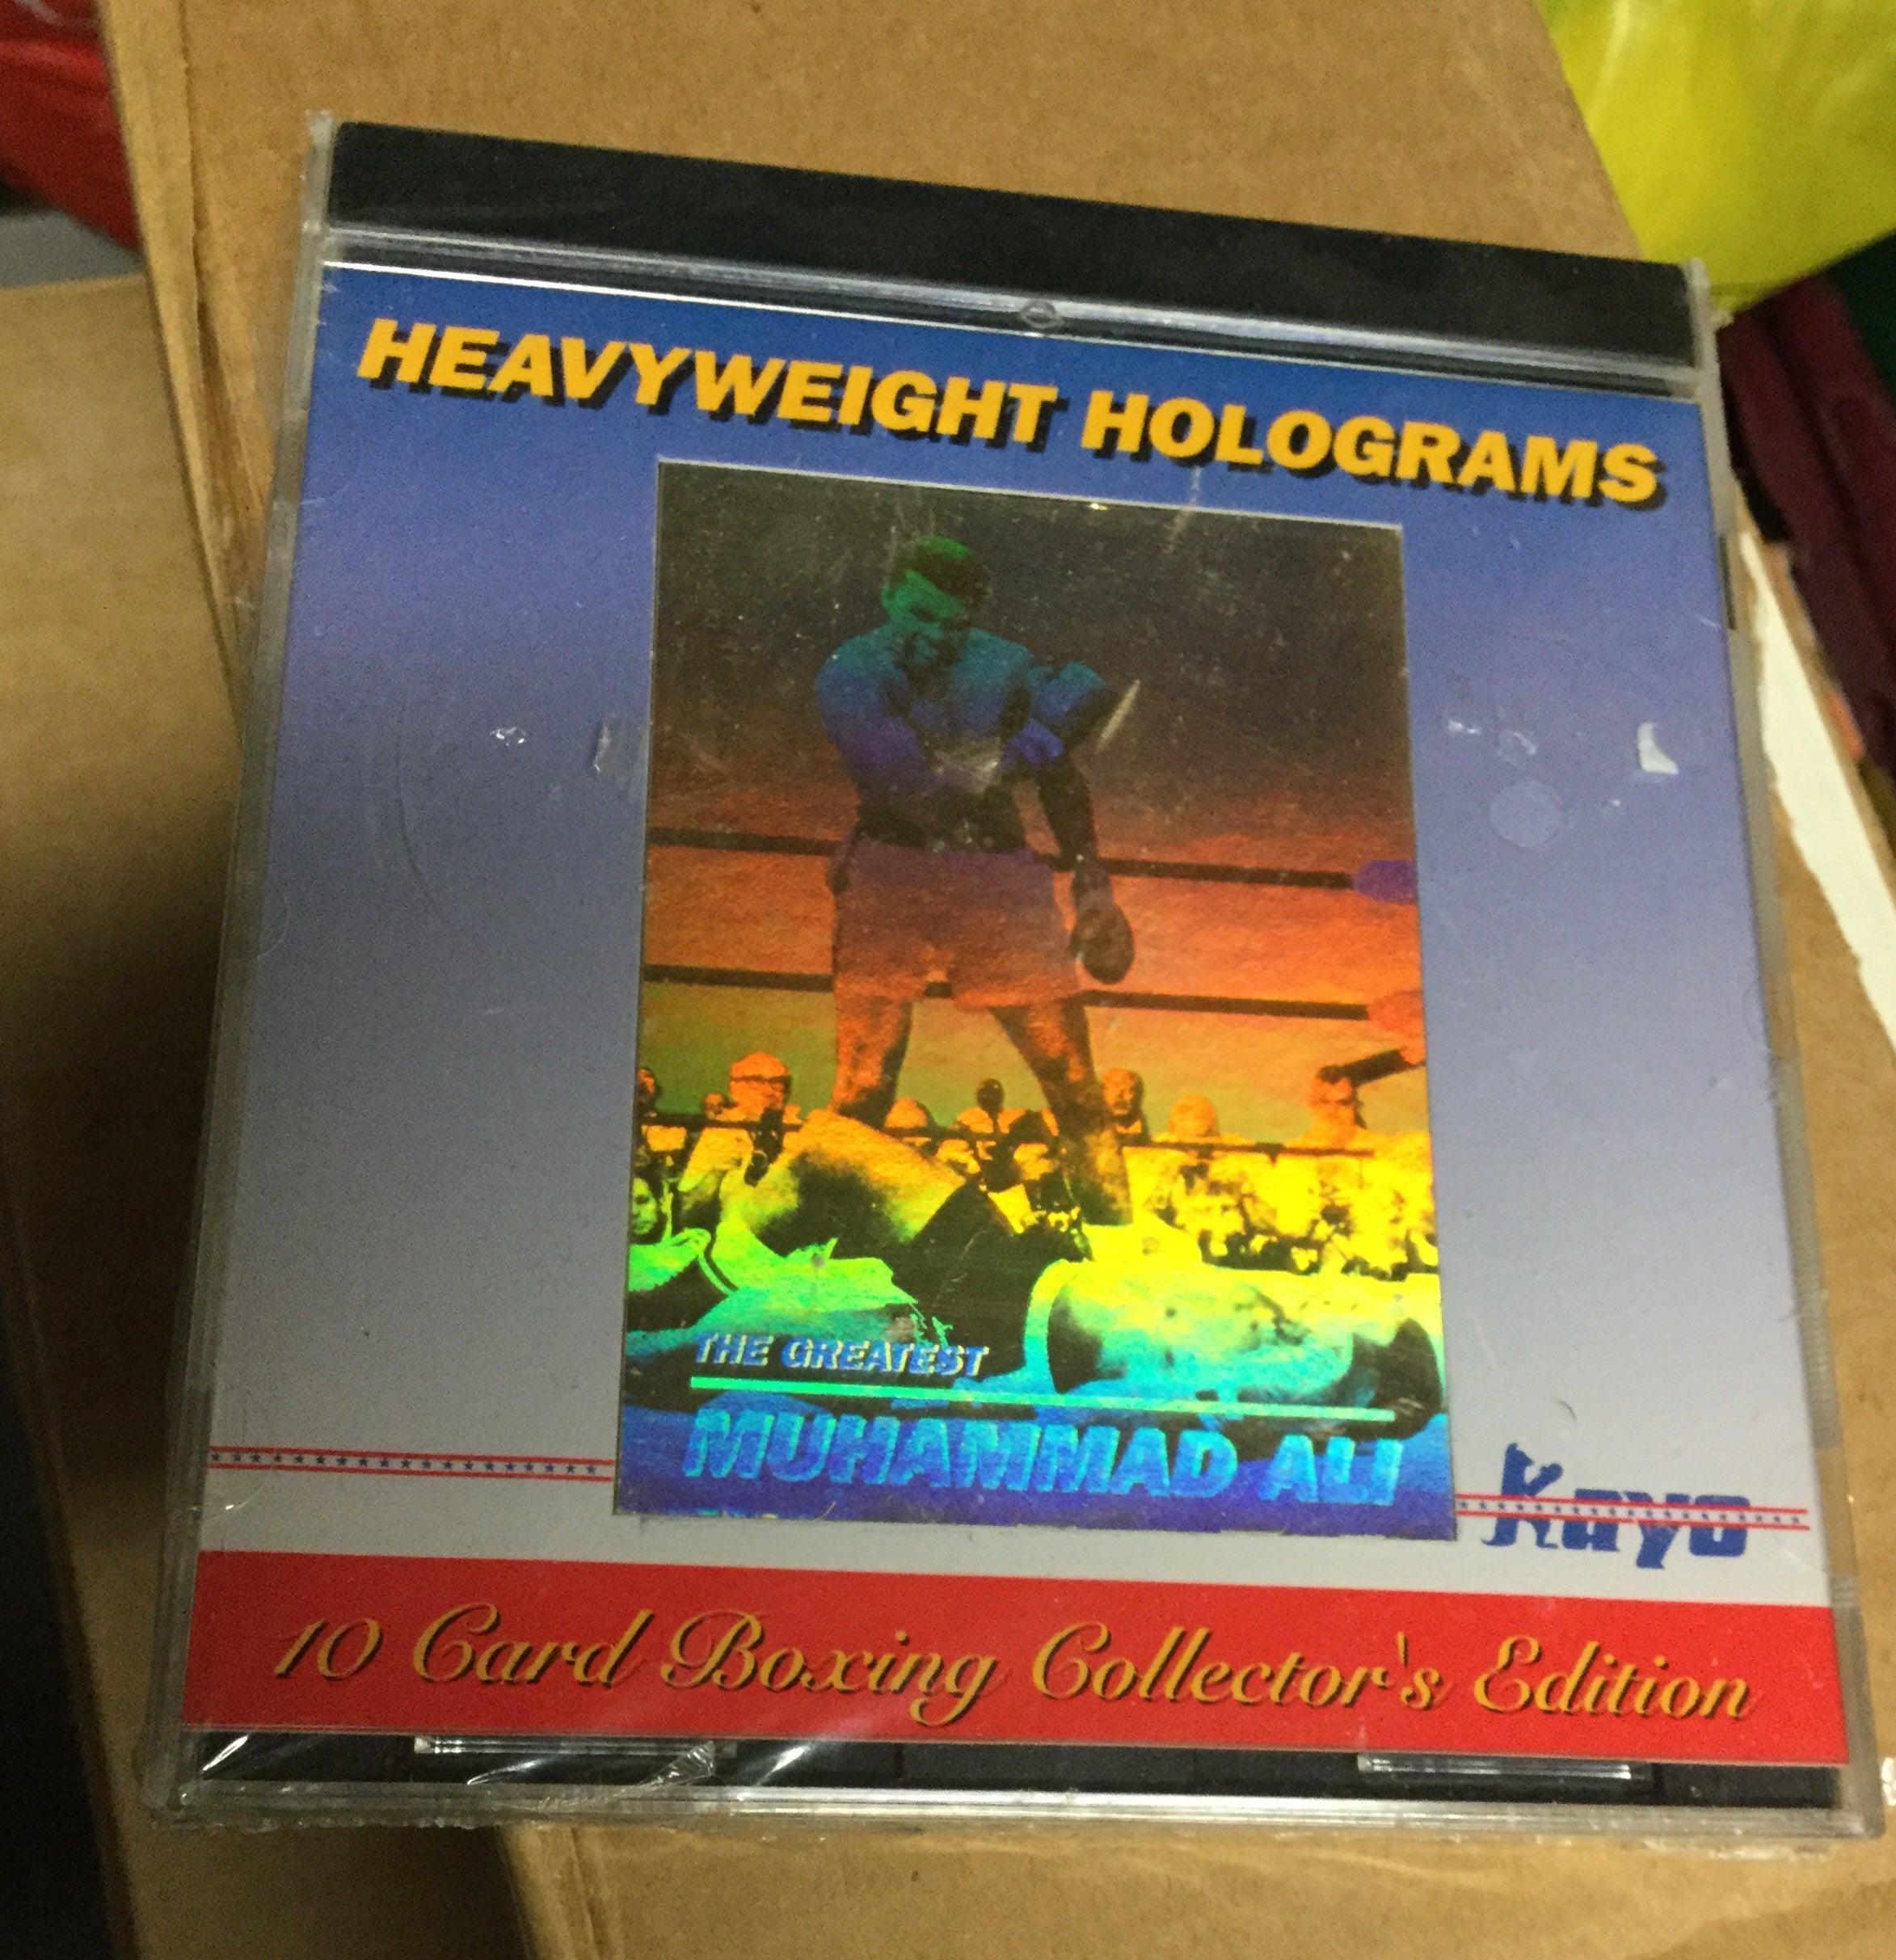 Muhammad Ali and more Kayo Boxing legends factory sealed hologram cards set1990/91